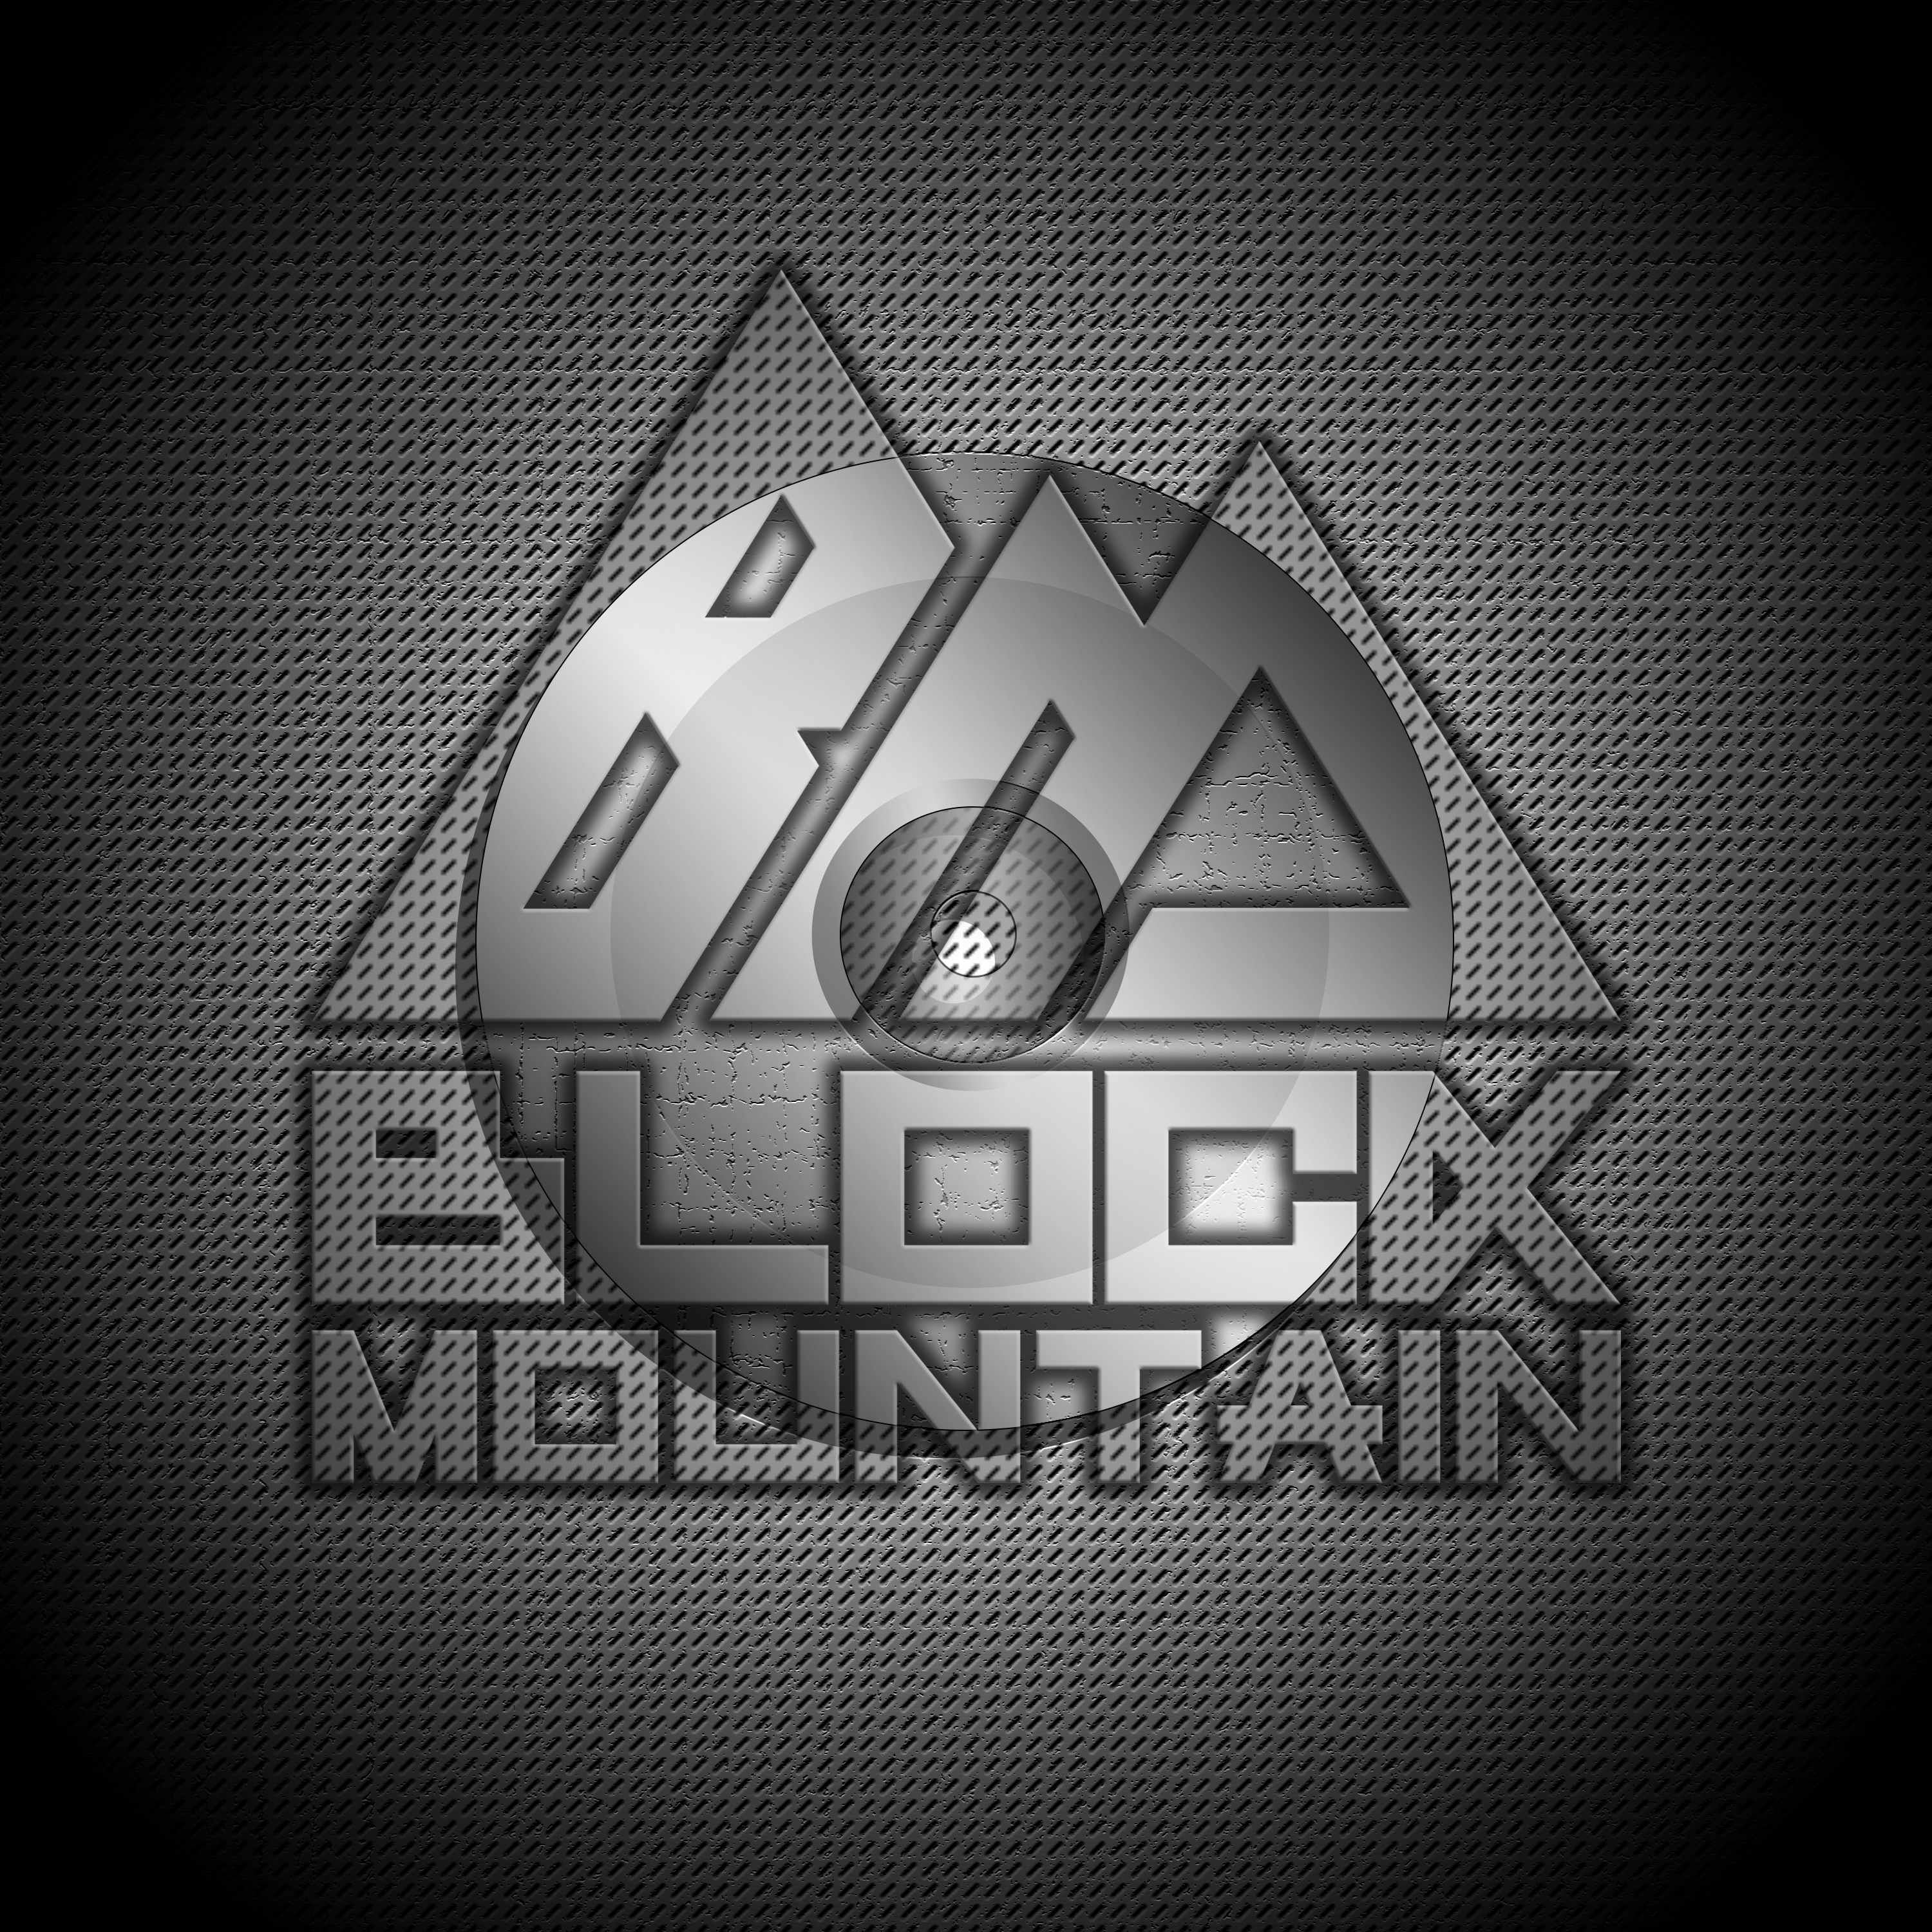 Block mountain by Marlon241982.png